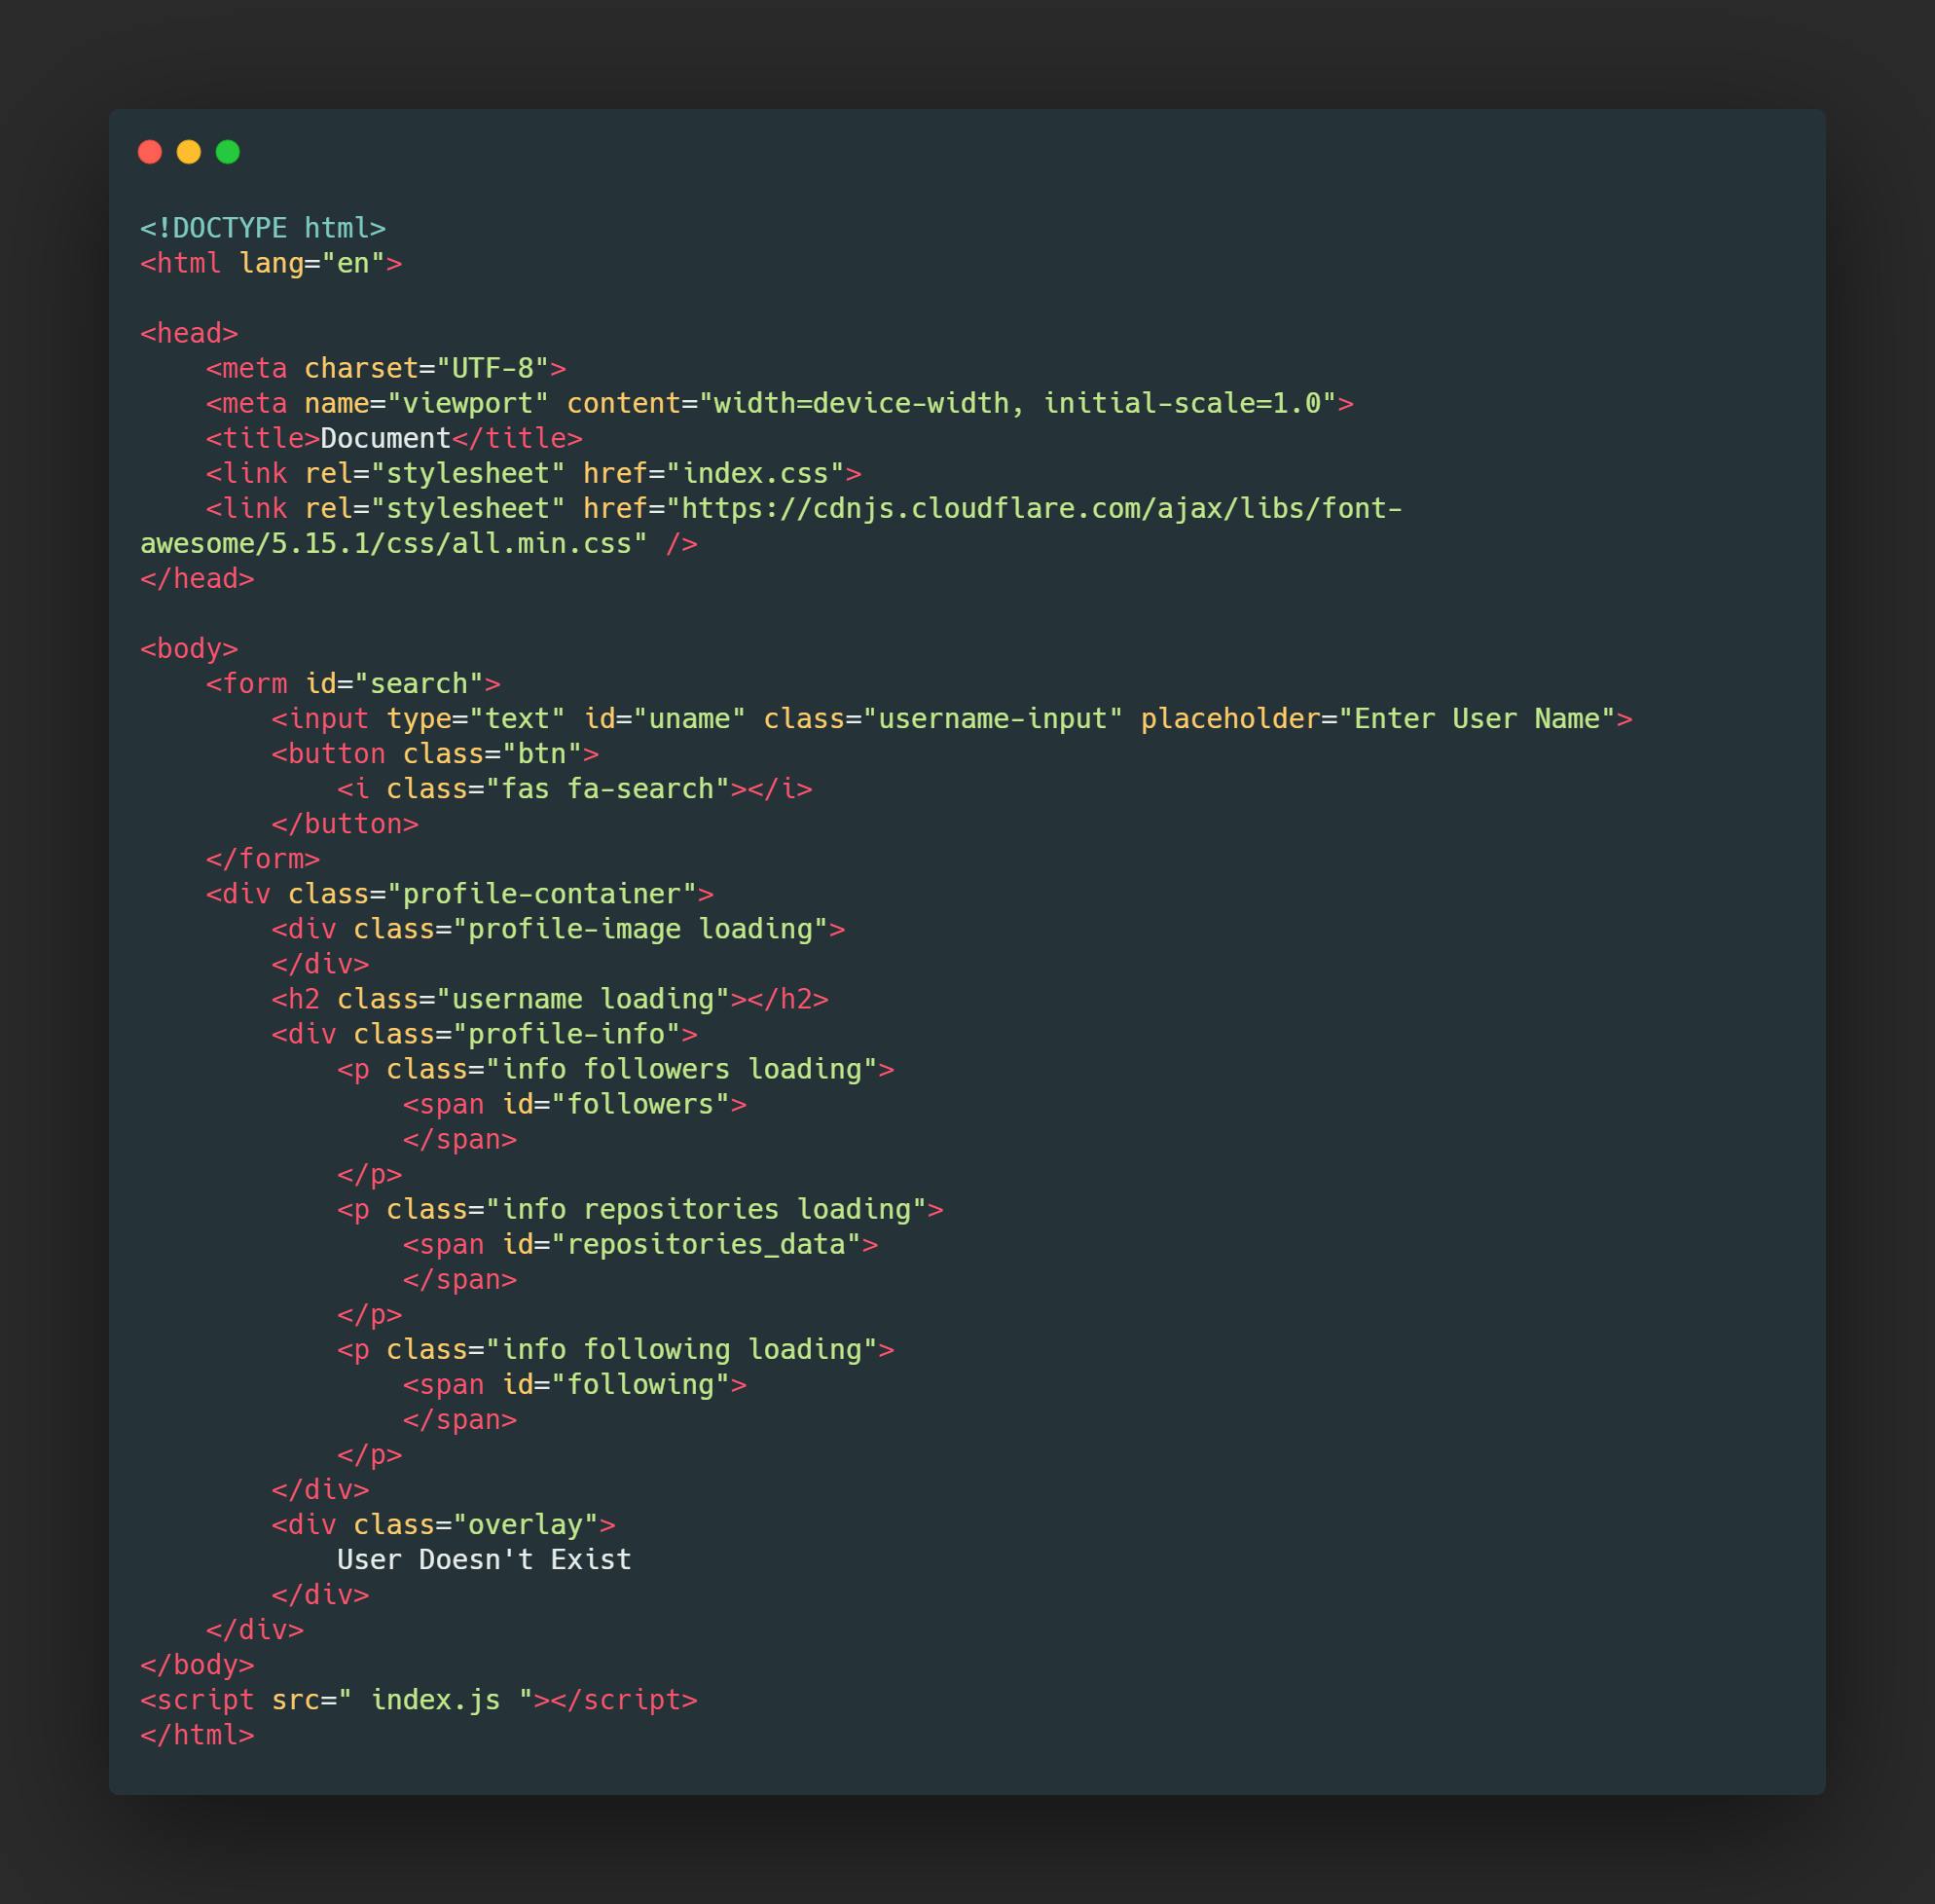 Code in HTML